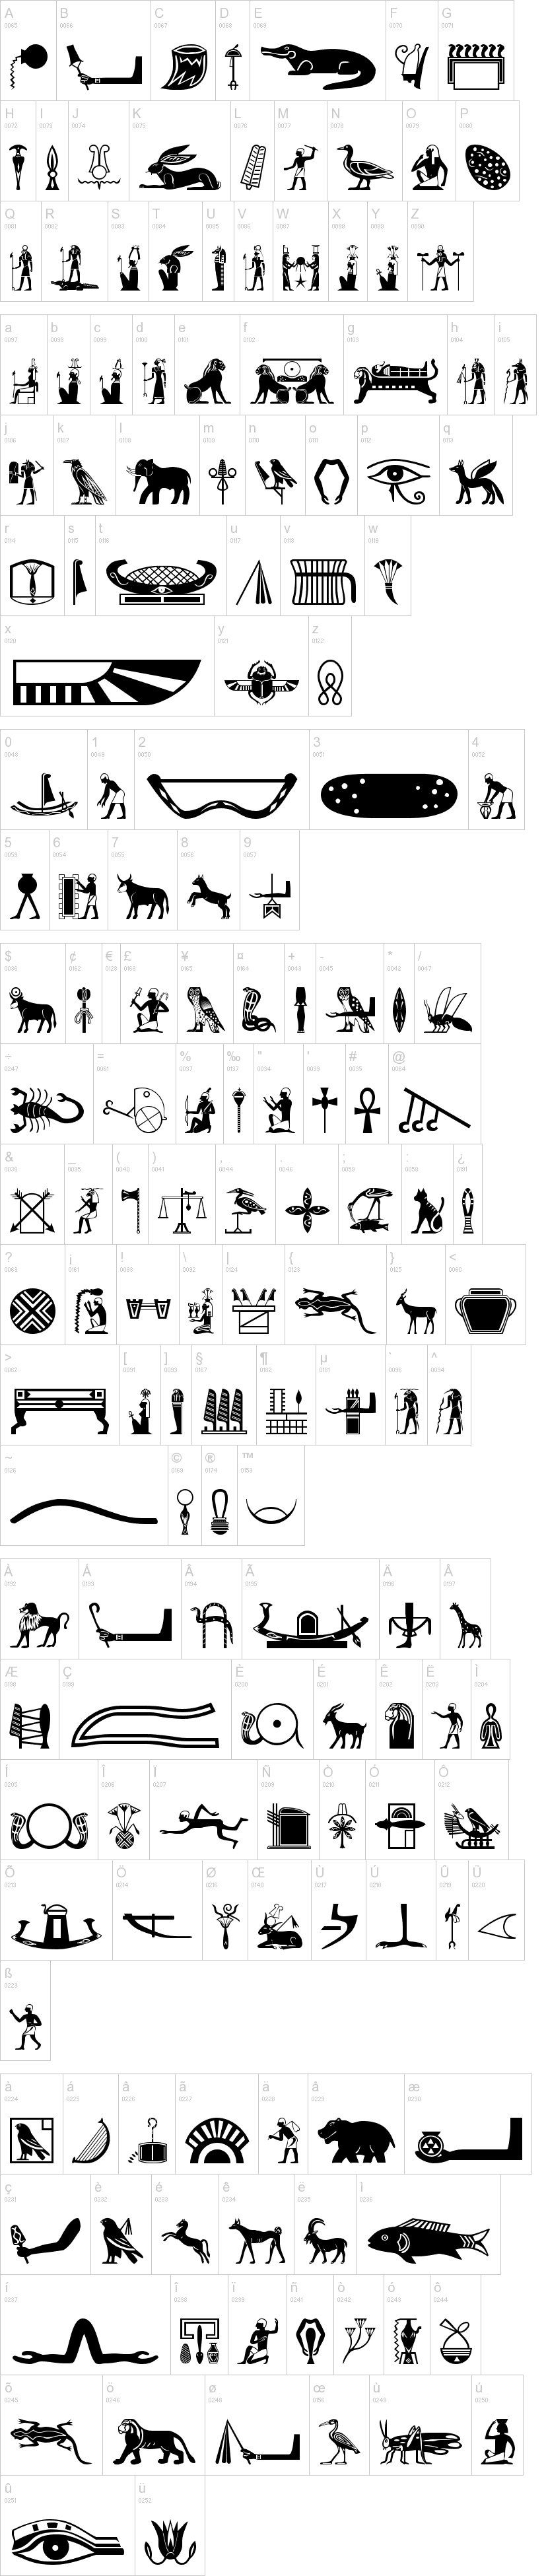 Old Egypt Glyphs